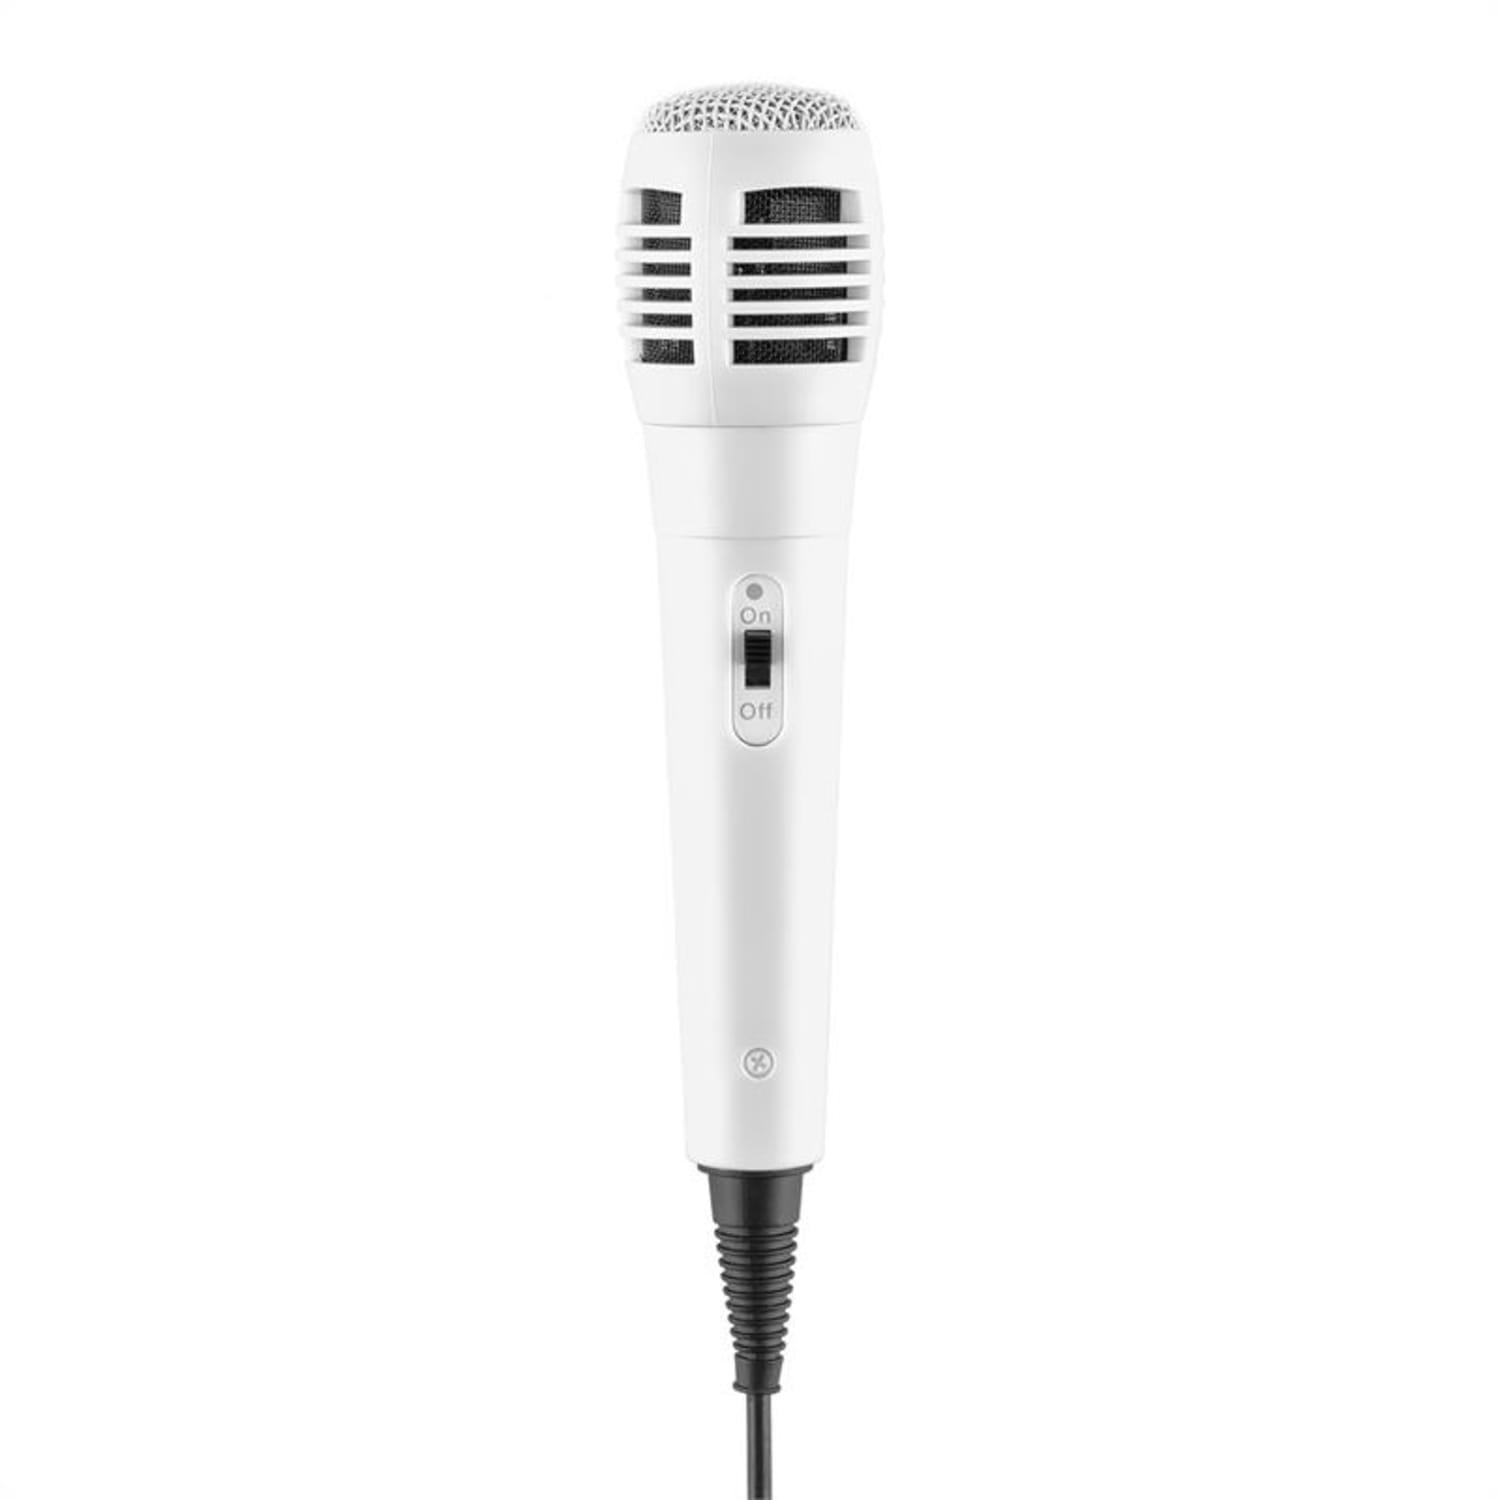 AUNA DiscoFever Weiß Karaoke-Anlage, LED